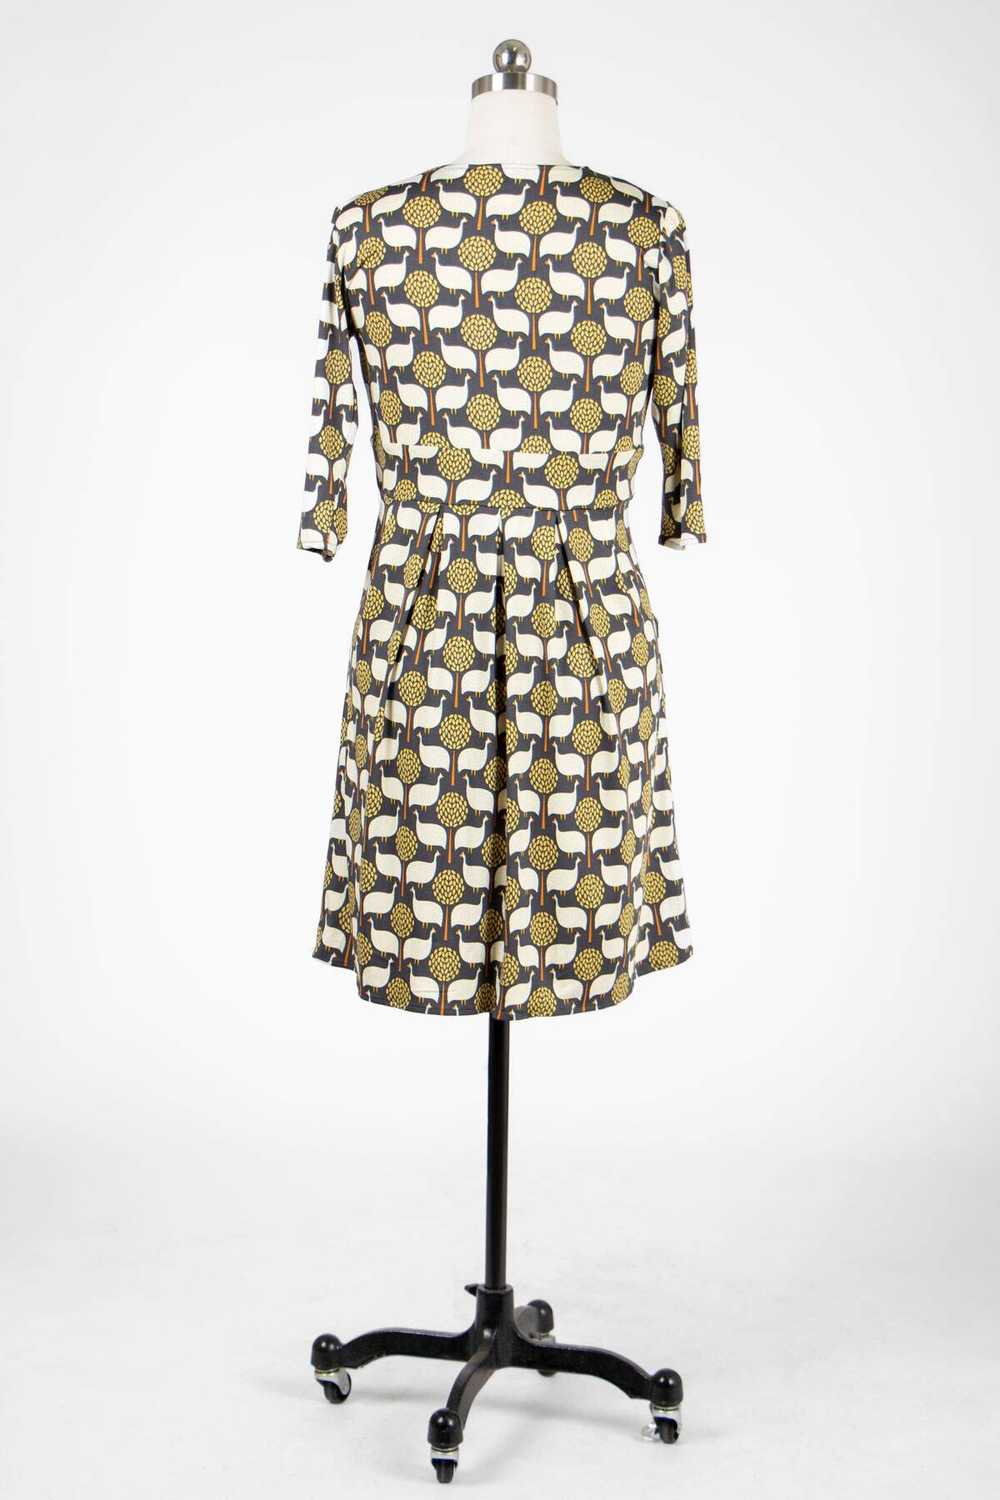 Karina Dresses Penelope Dress - Plume and Bloom - image 7